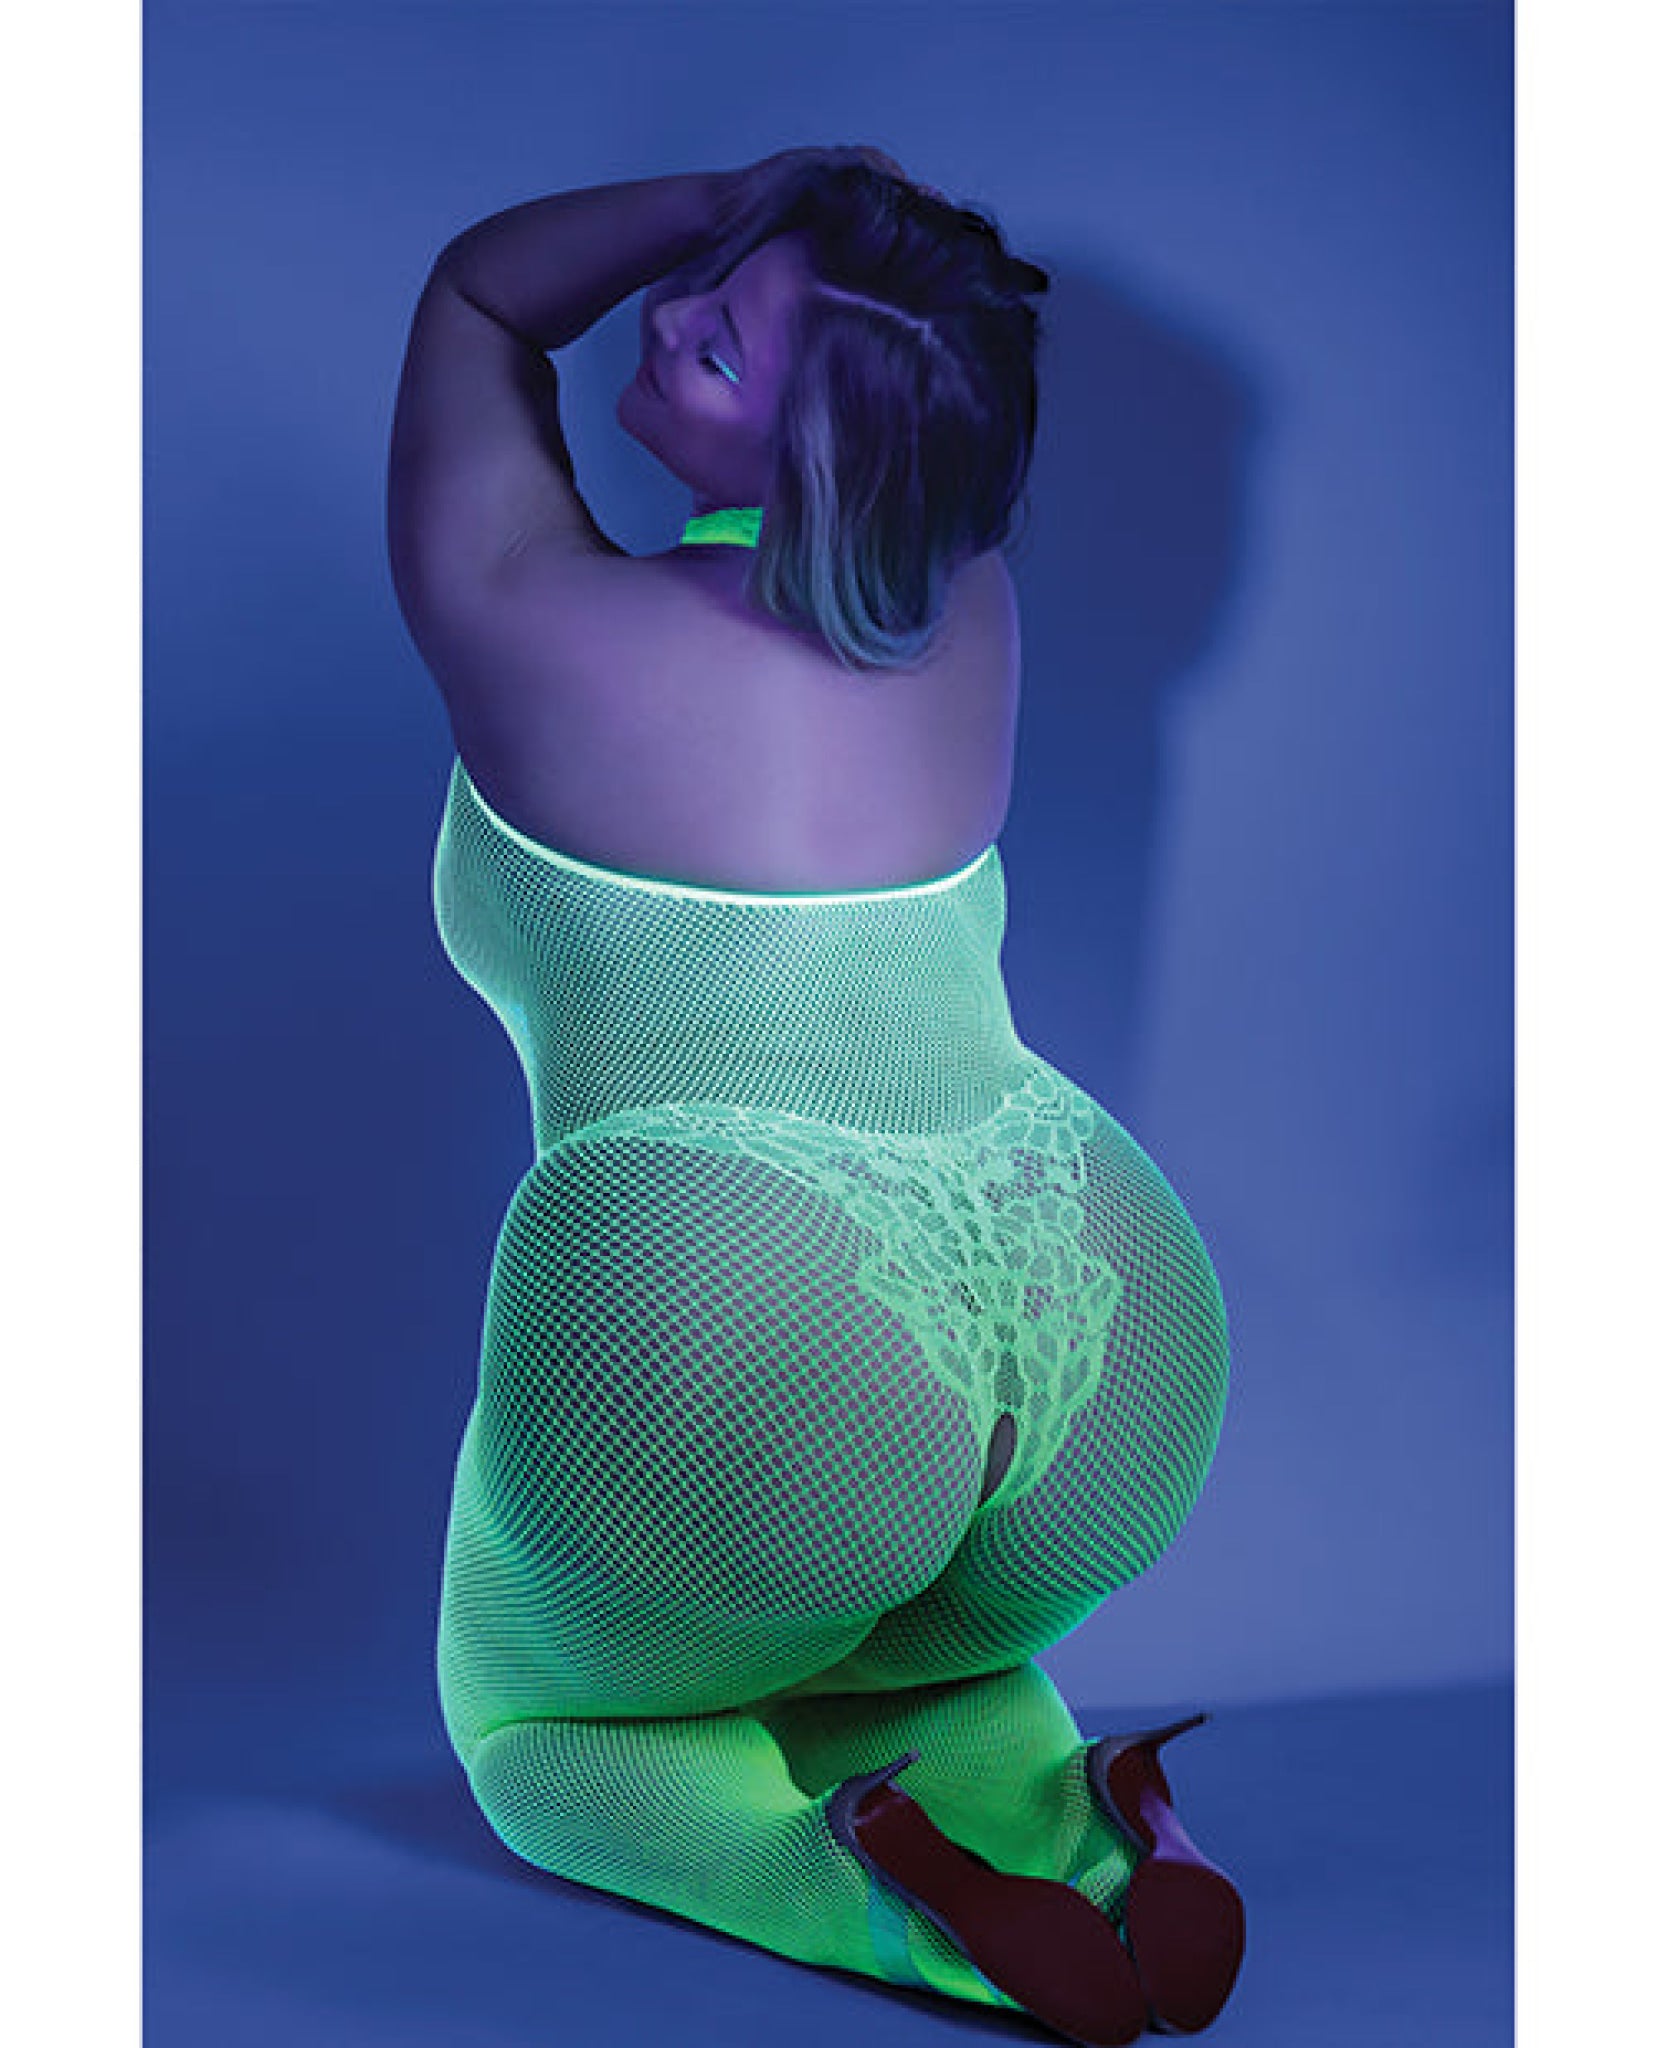 Glow Black Light Crotchless Bodystocking Neon Green Qn Fantasy Lingerie